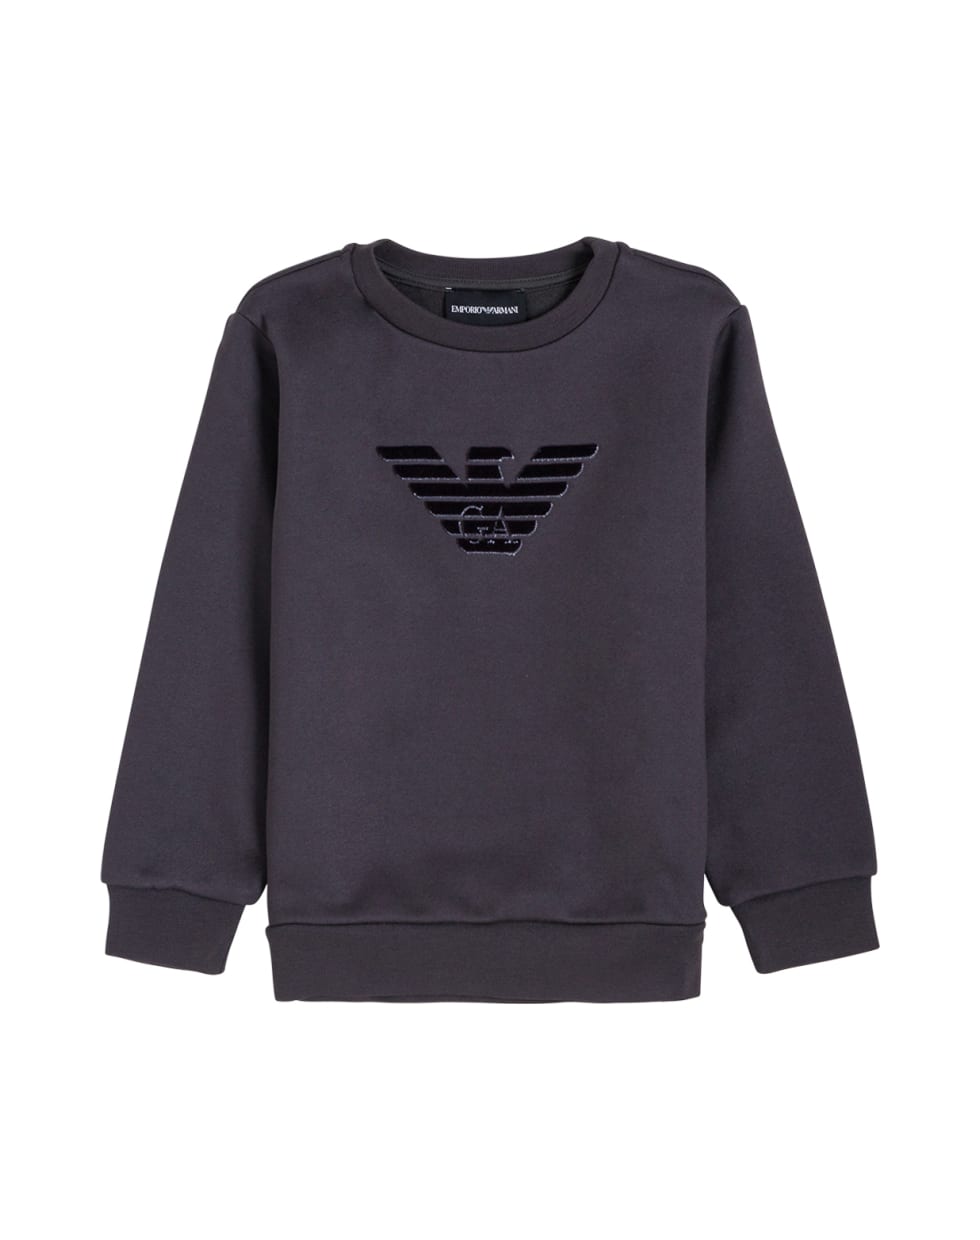 Emporio Armani Black Modal Blend Sweatshirt With Logo - Black